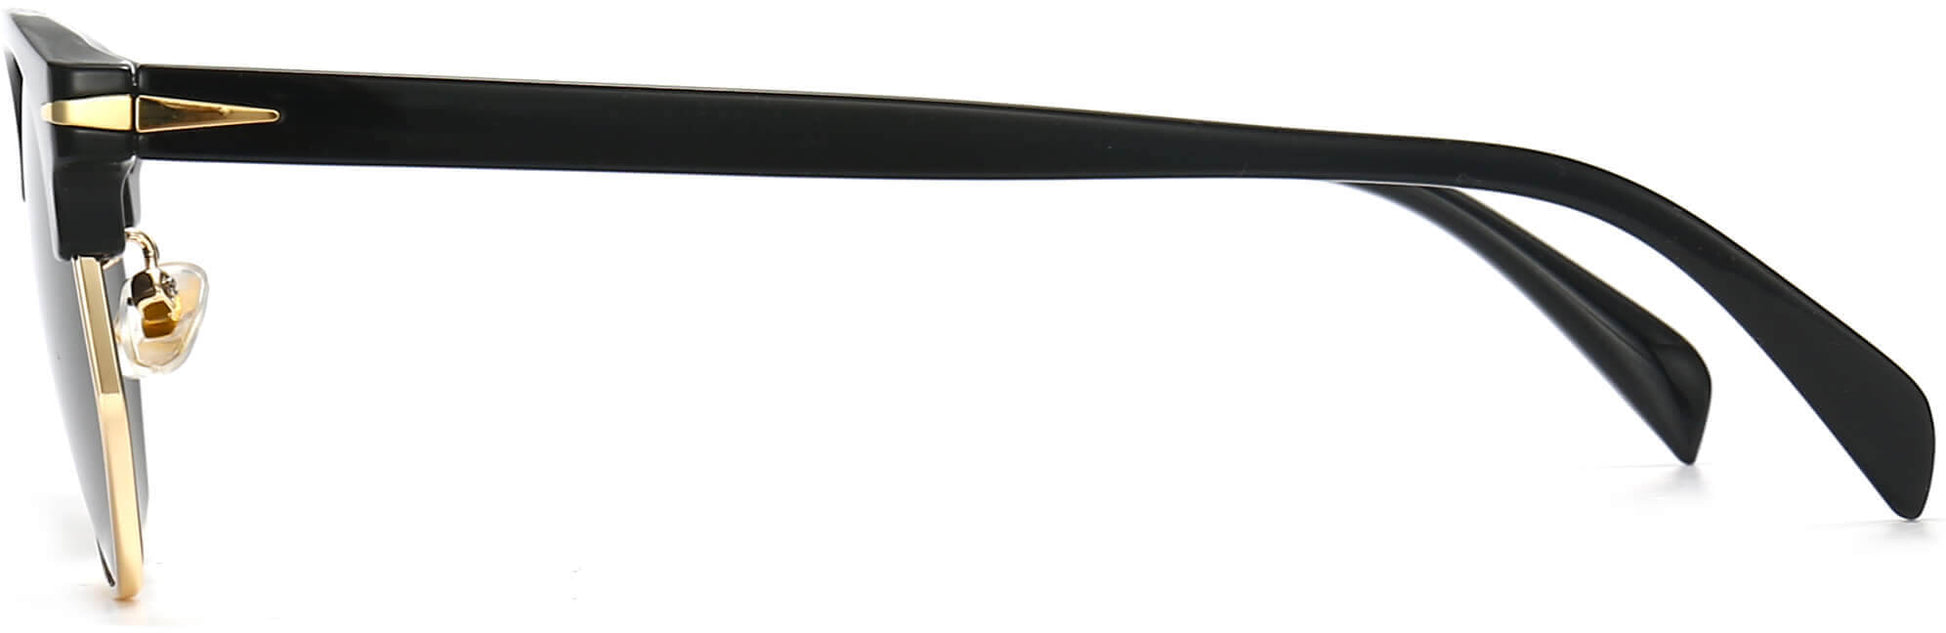 Jackson Black Stainless steel Sunglasses from ANRRI